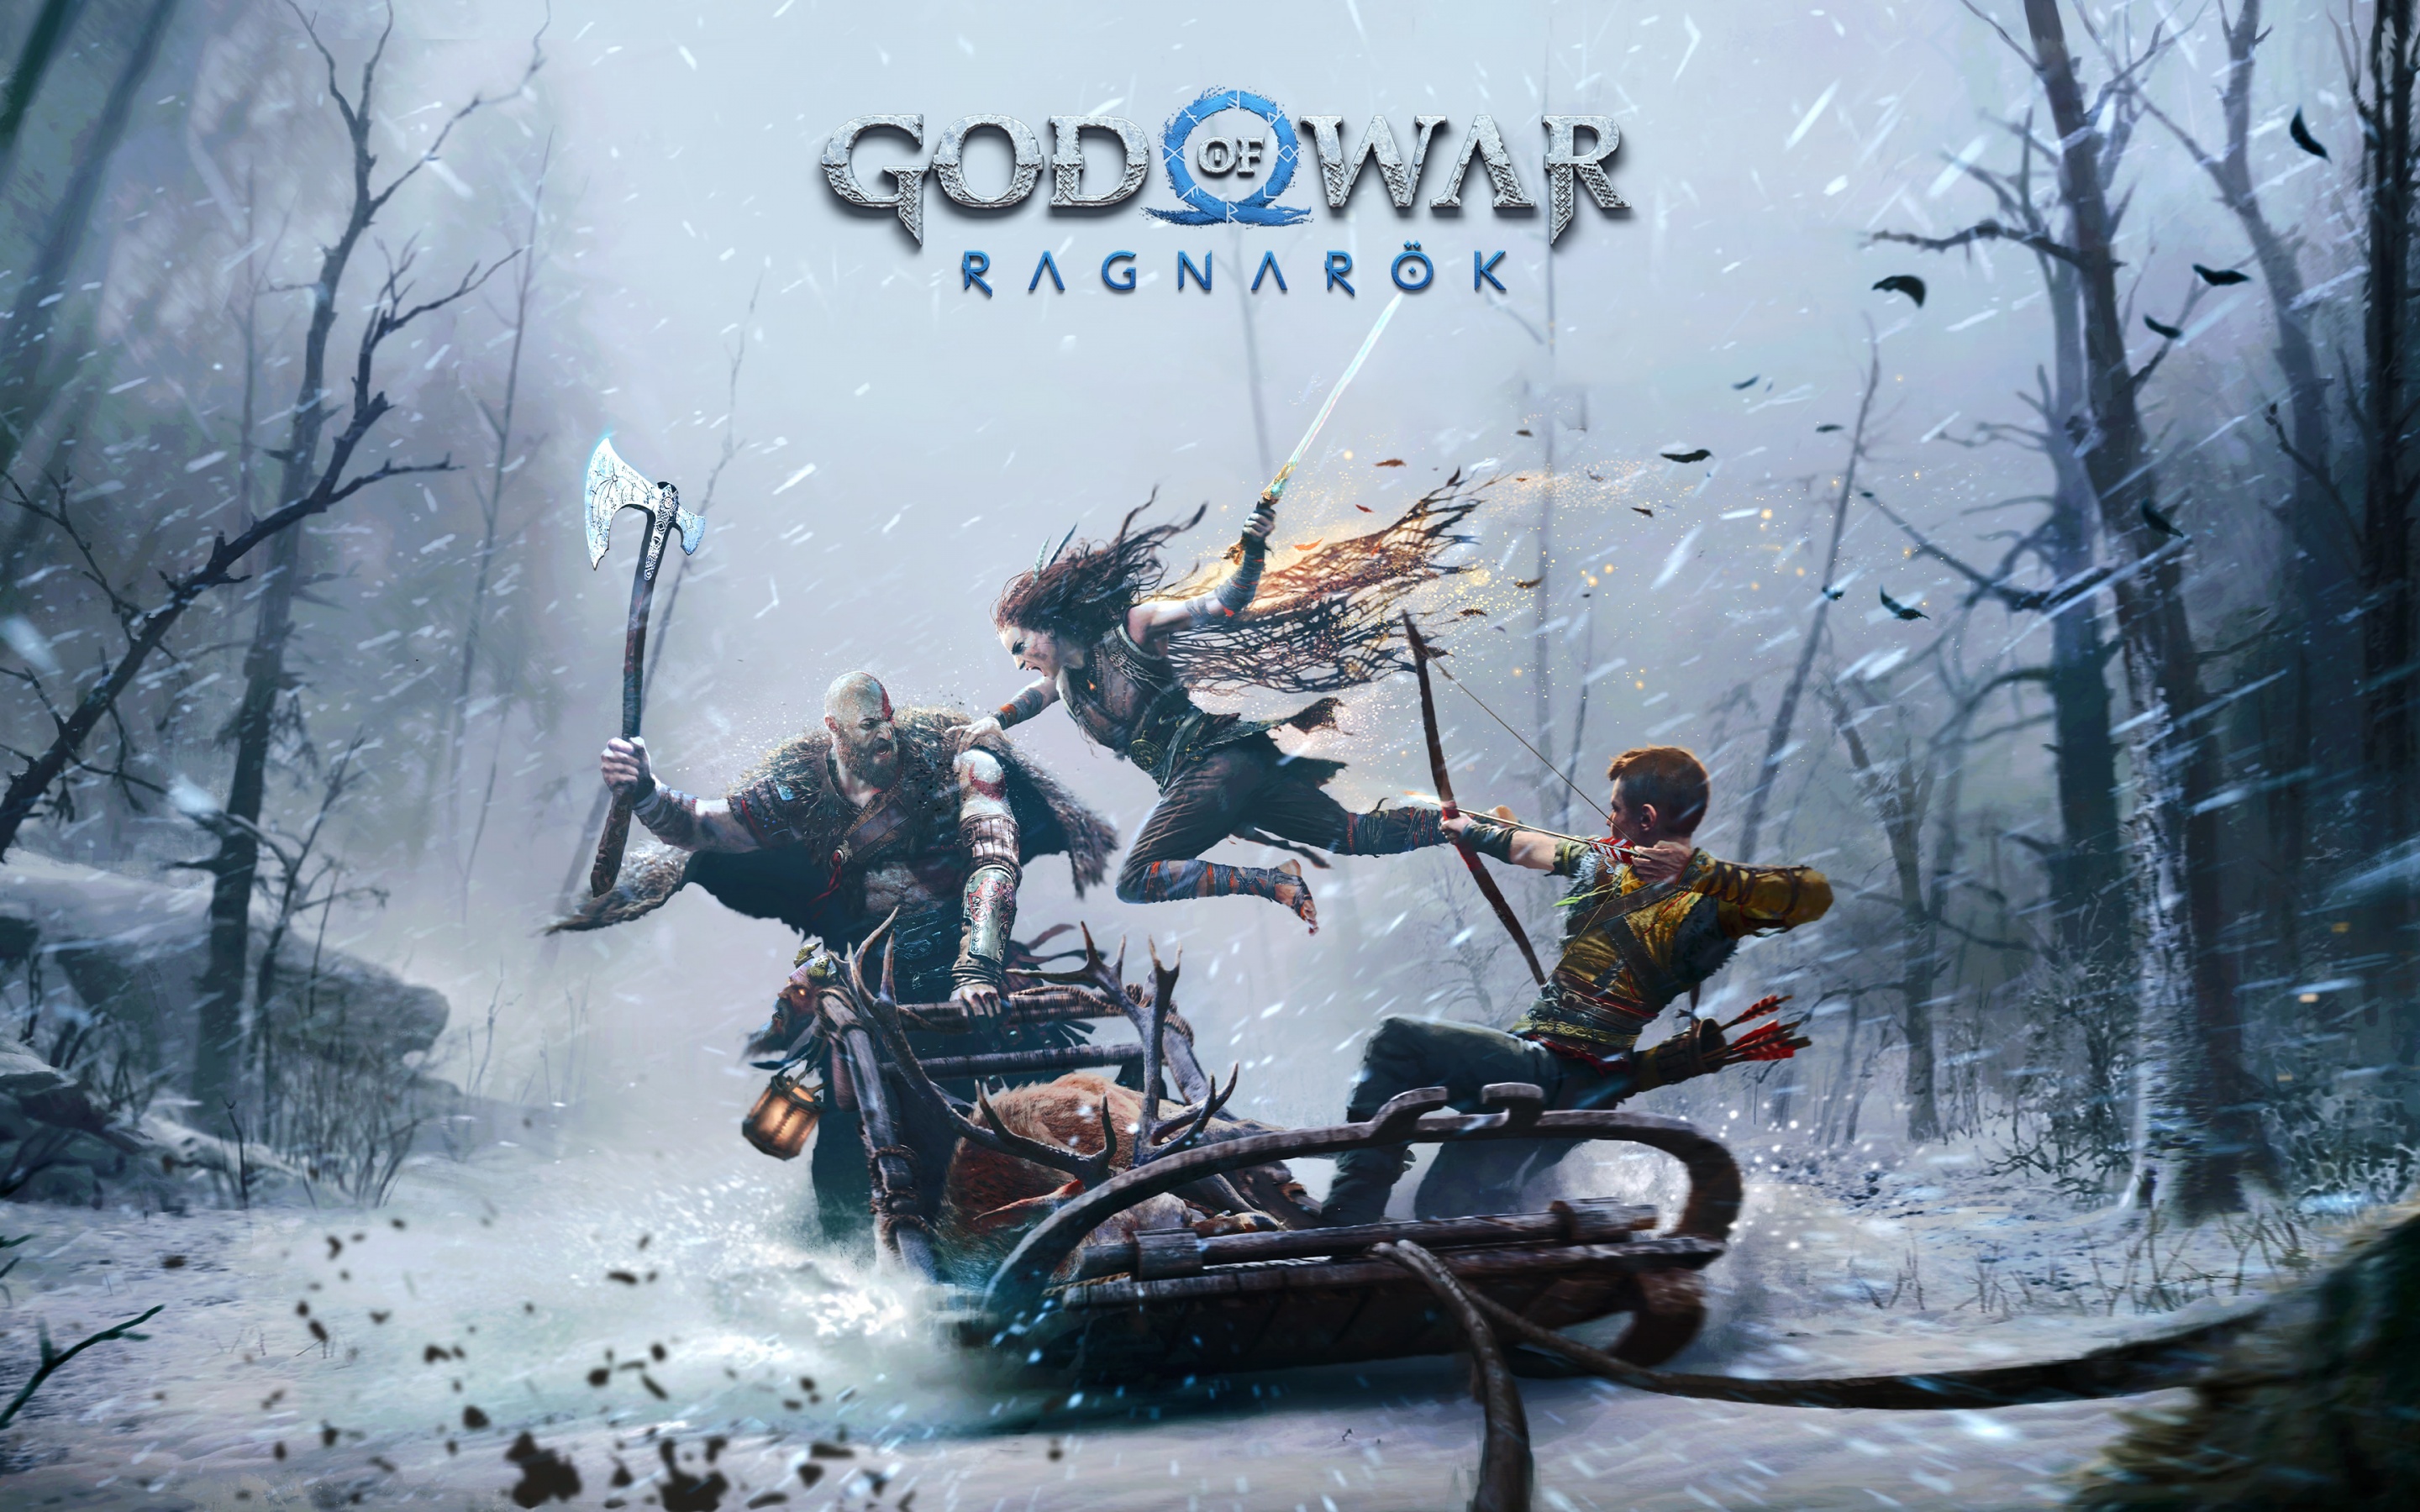 God of War Ragnarök Wallpaper 4K, Kratos, Freya, Atreus, Games, #8677